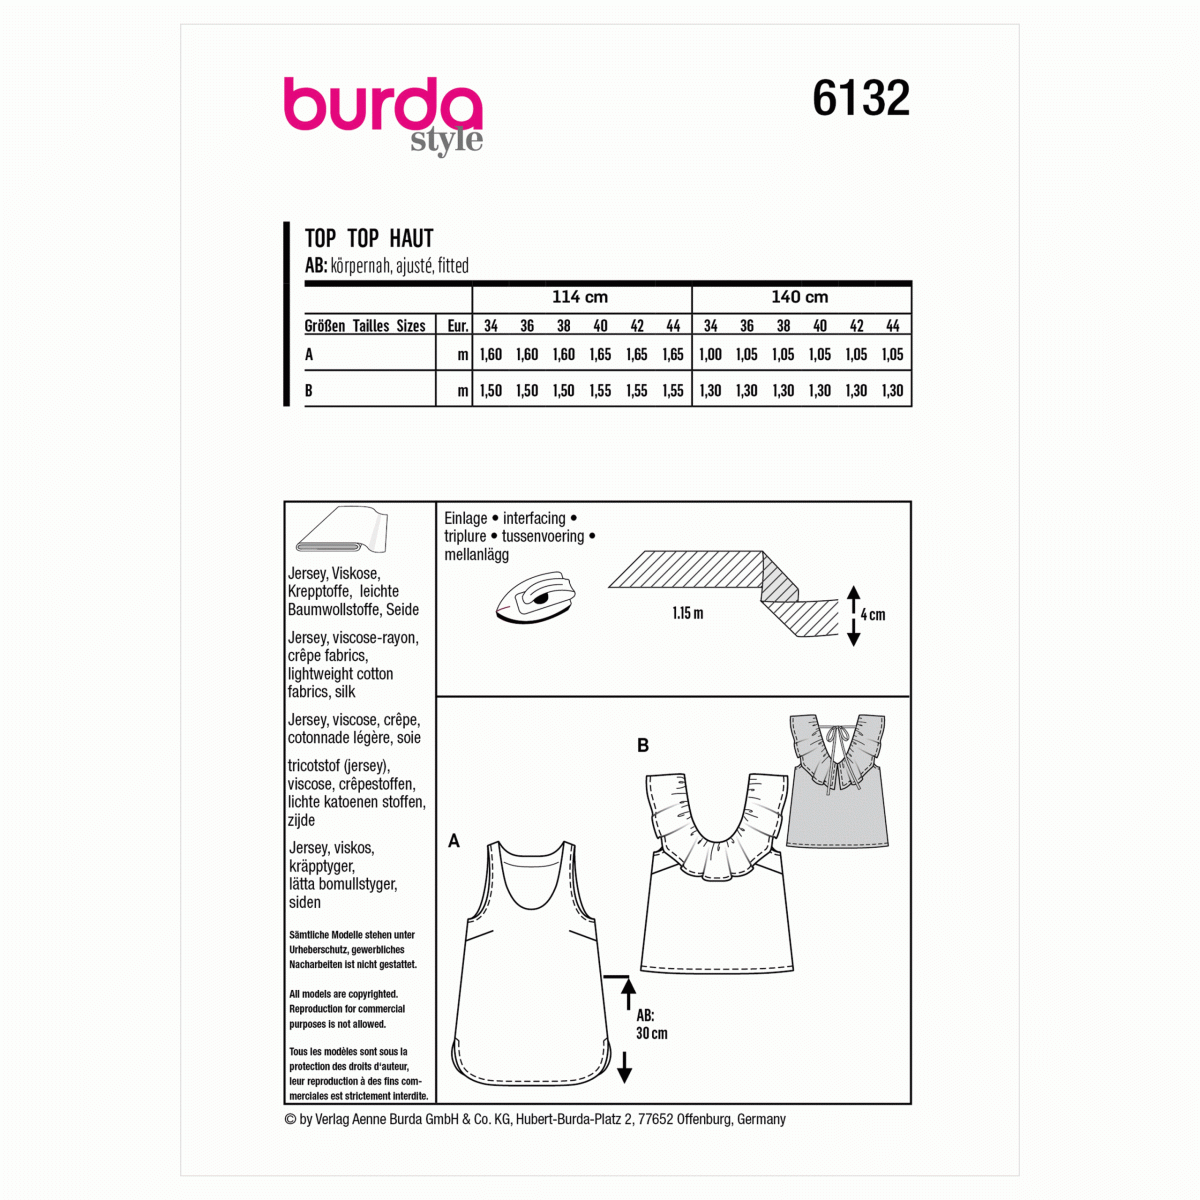 Burda Style Pattern 6132 Misses' Tank Top